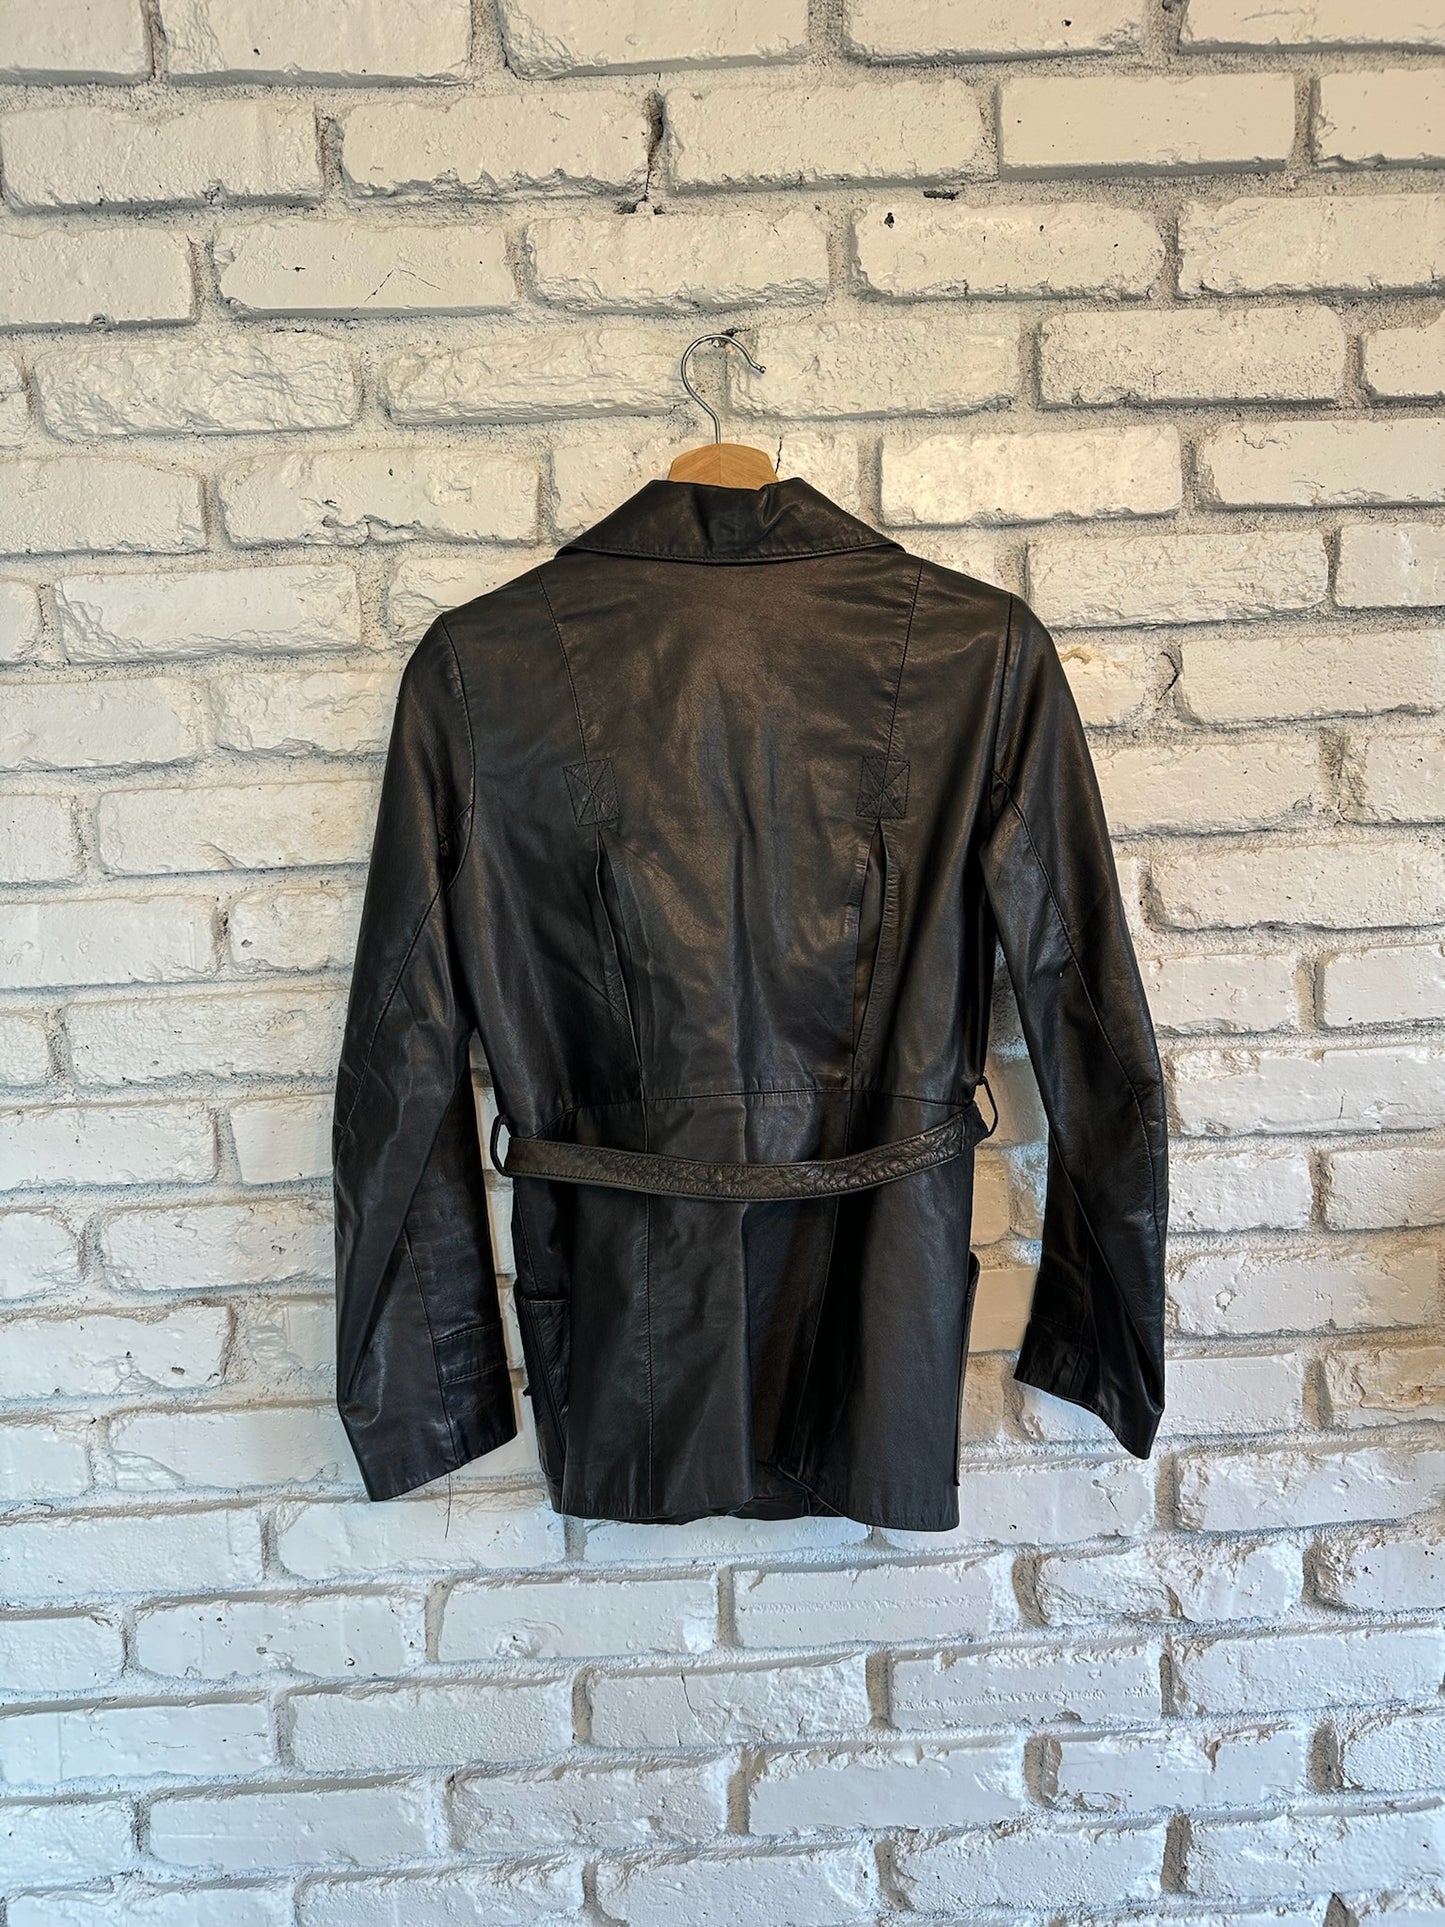 The Phoenix Leather Jacket